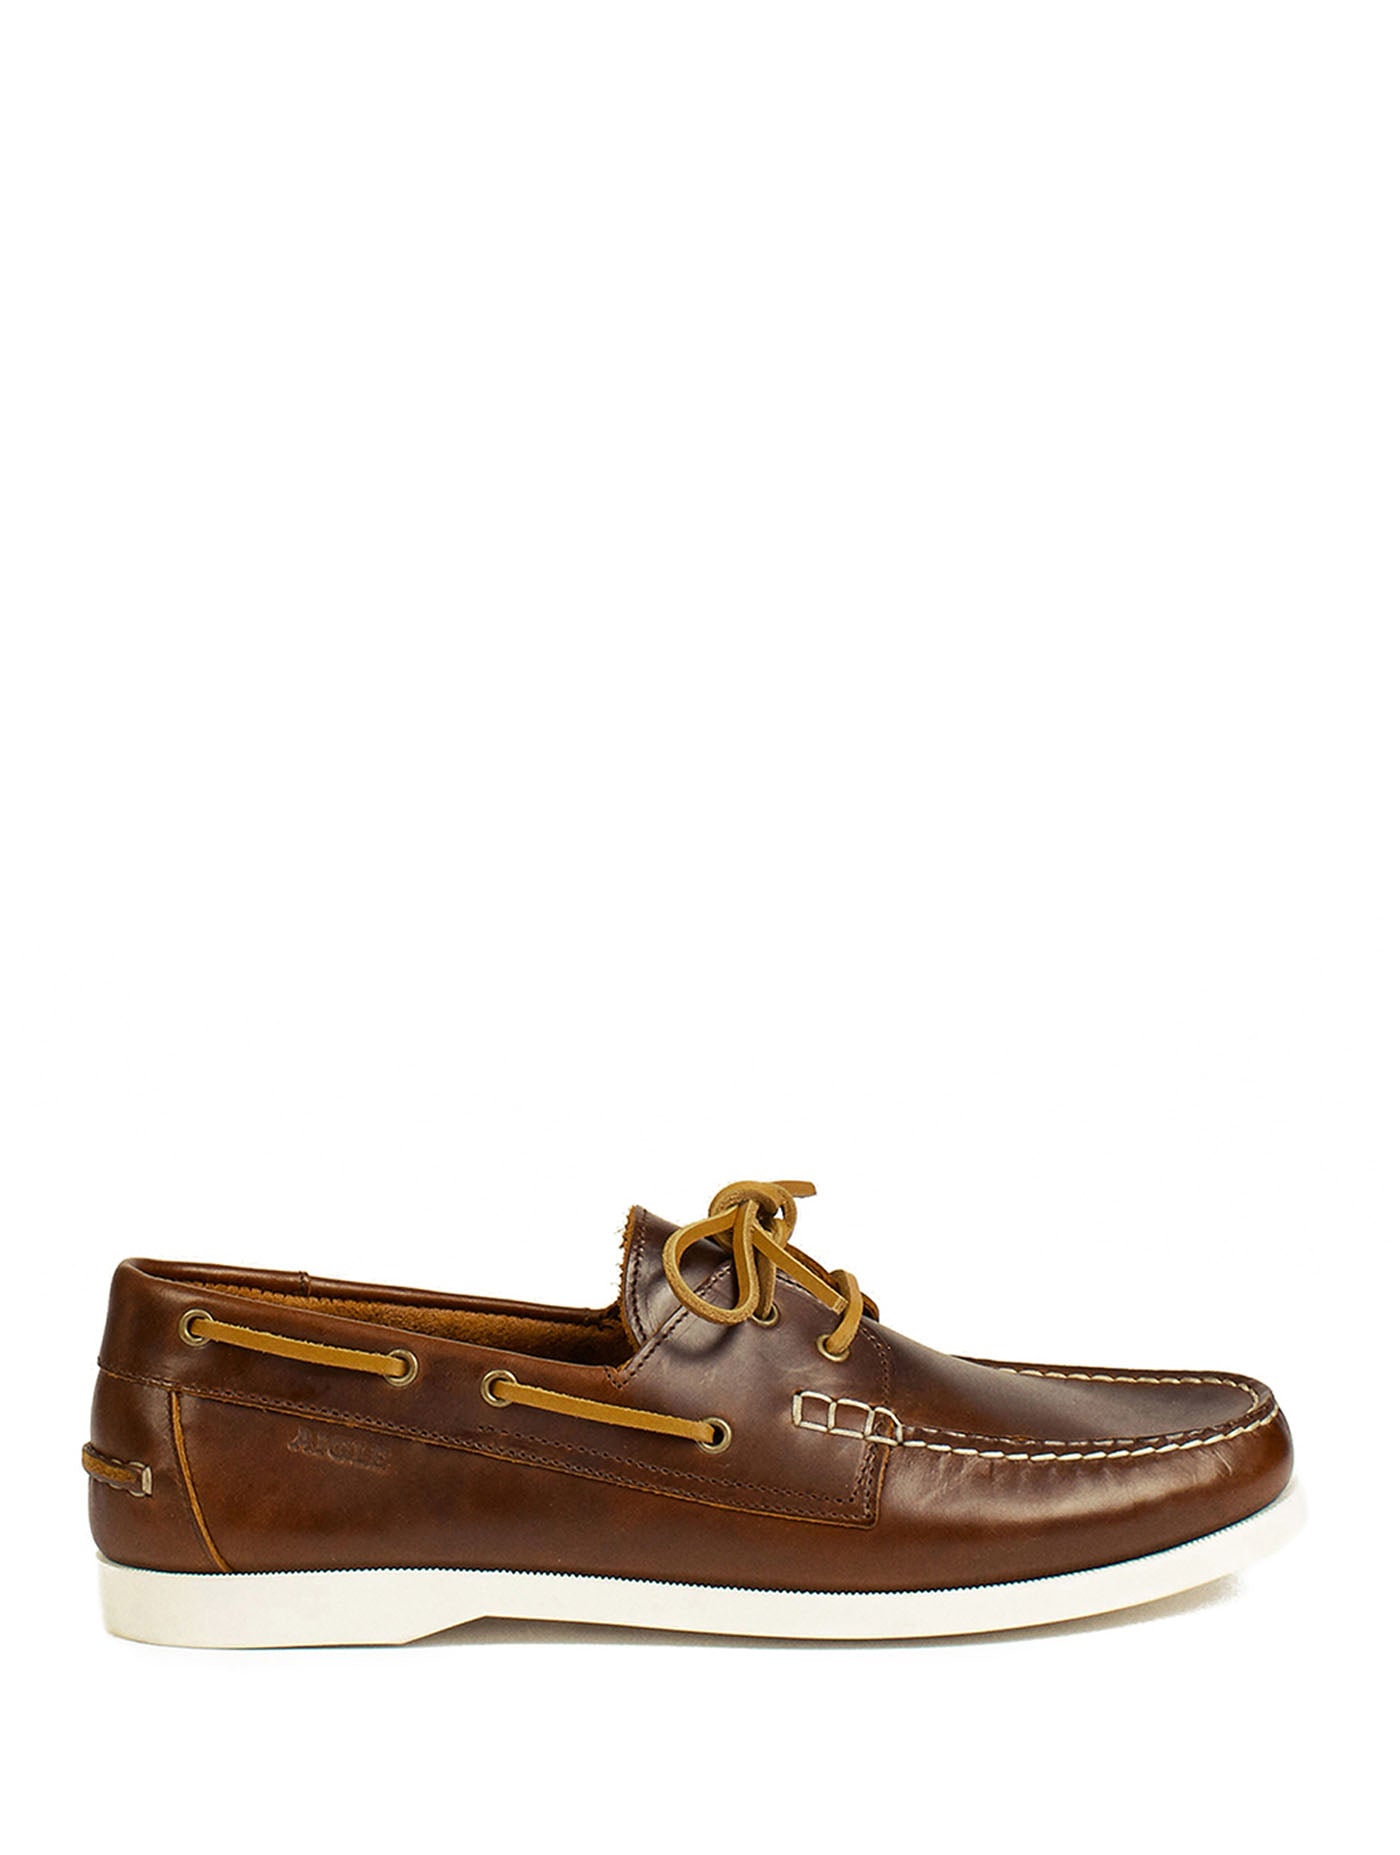 Leather boat shoes for men HAVSEA